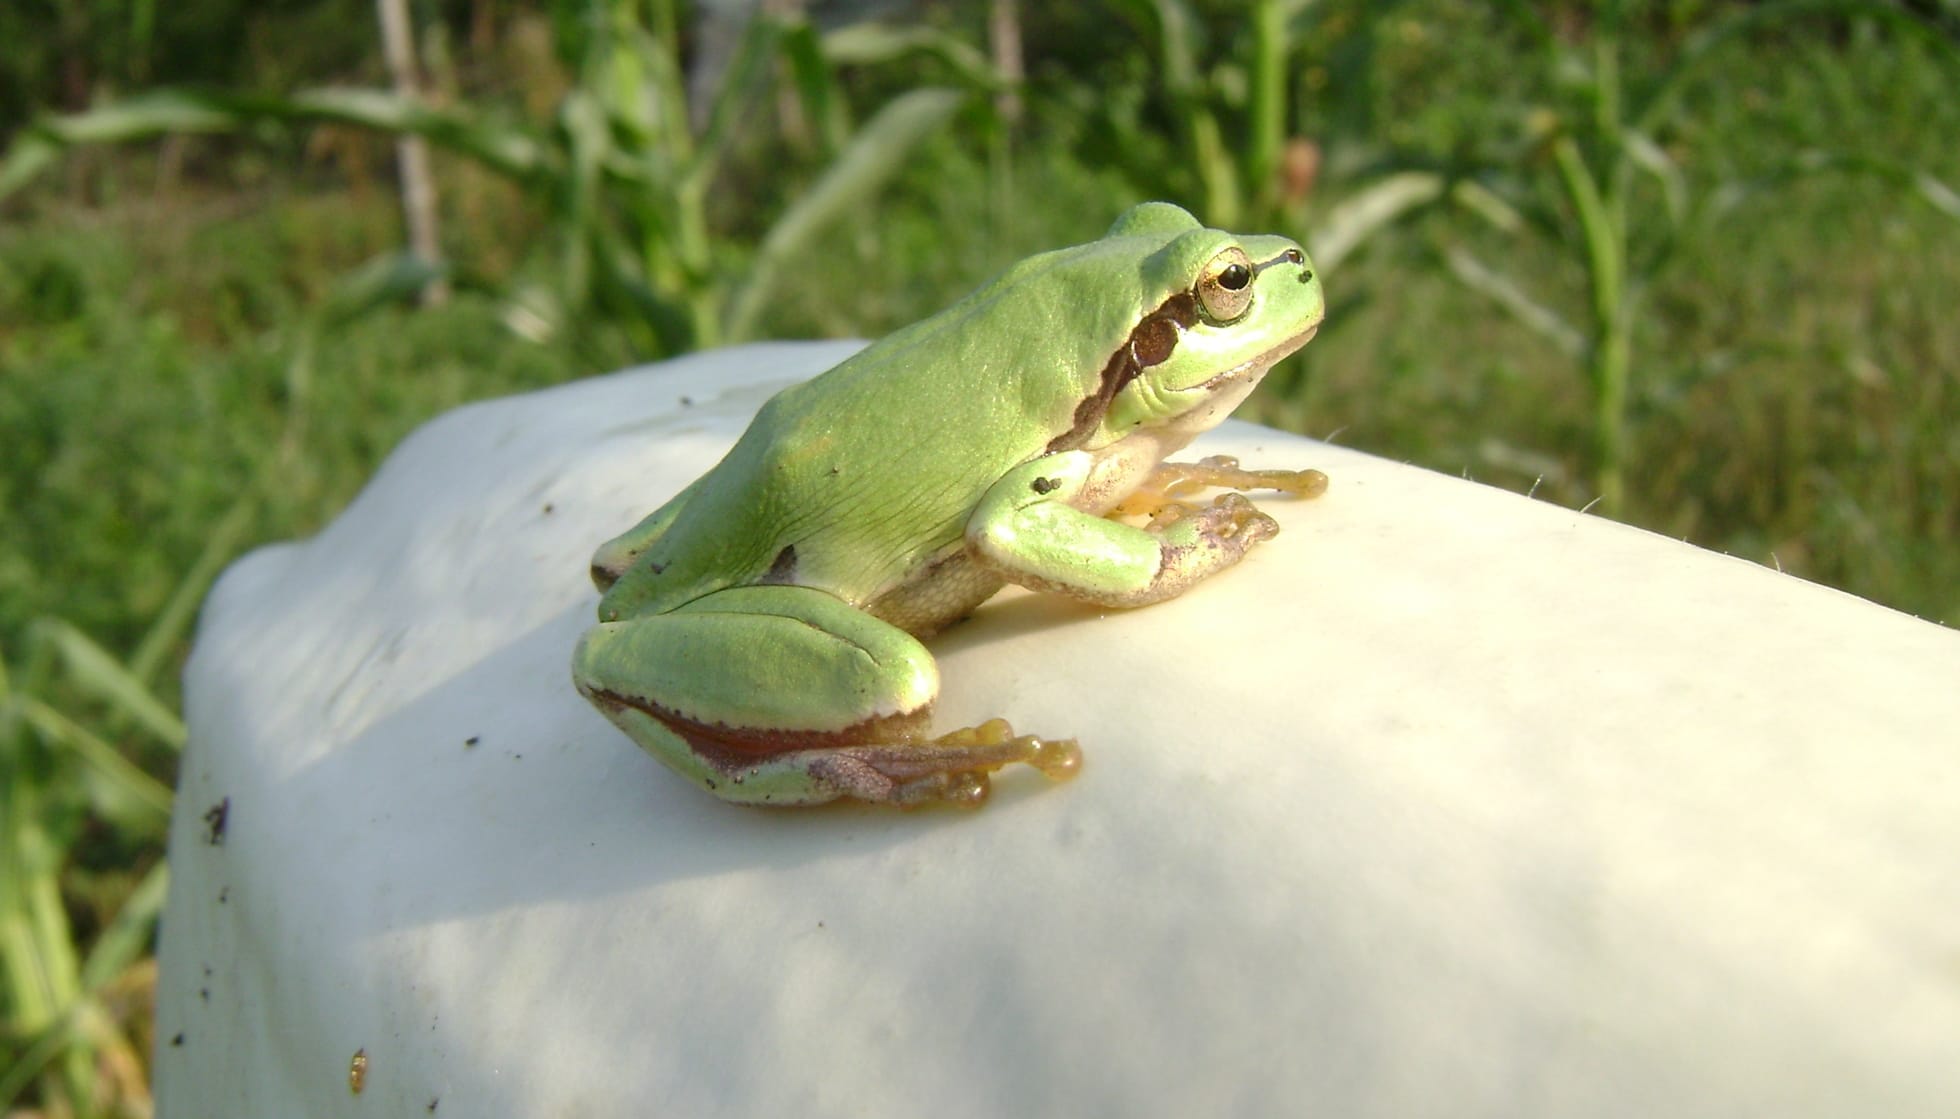  An European tree frog 